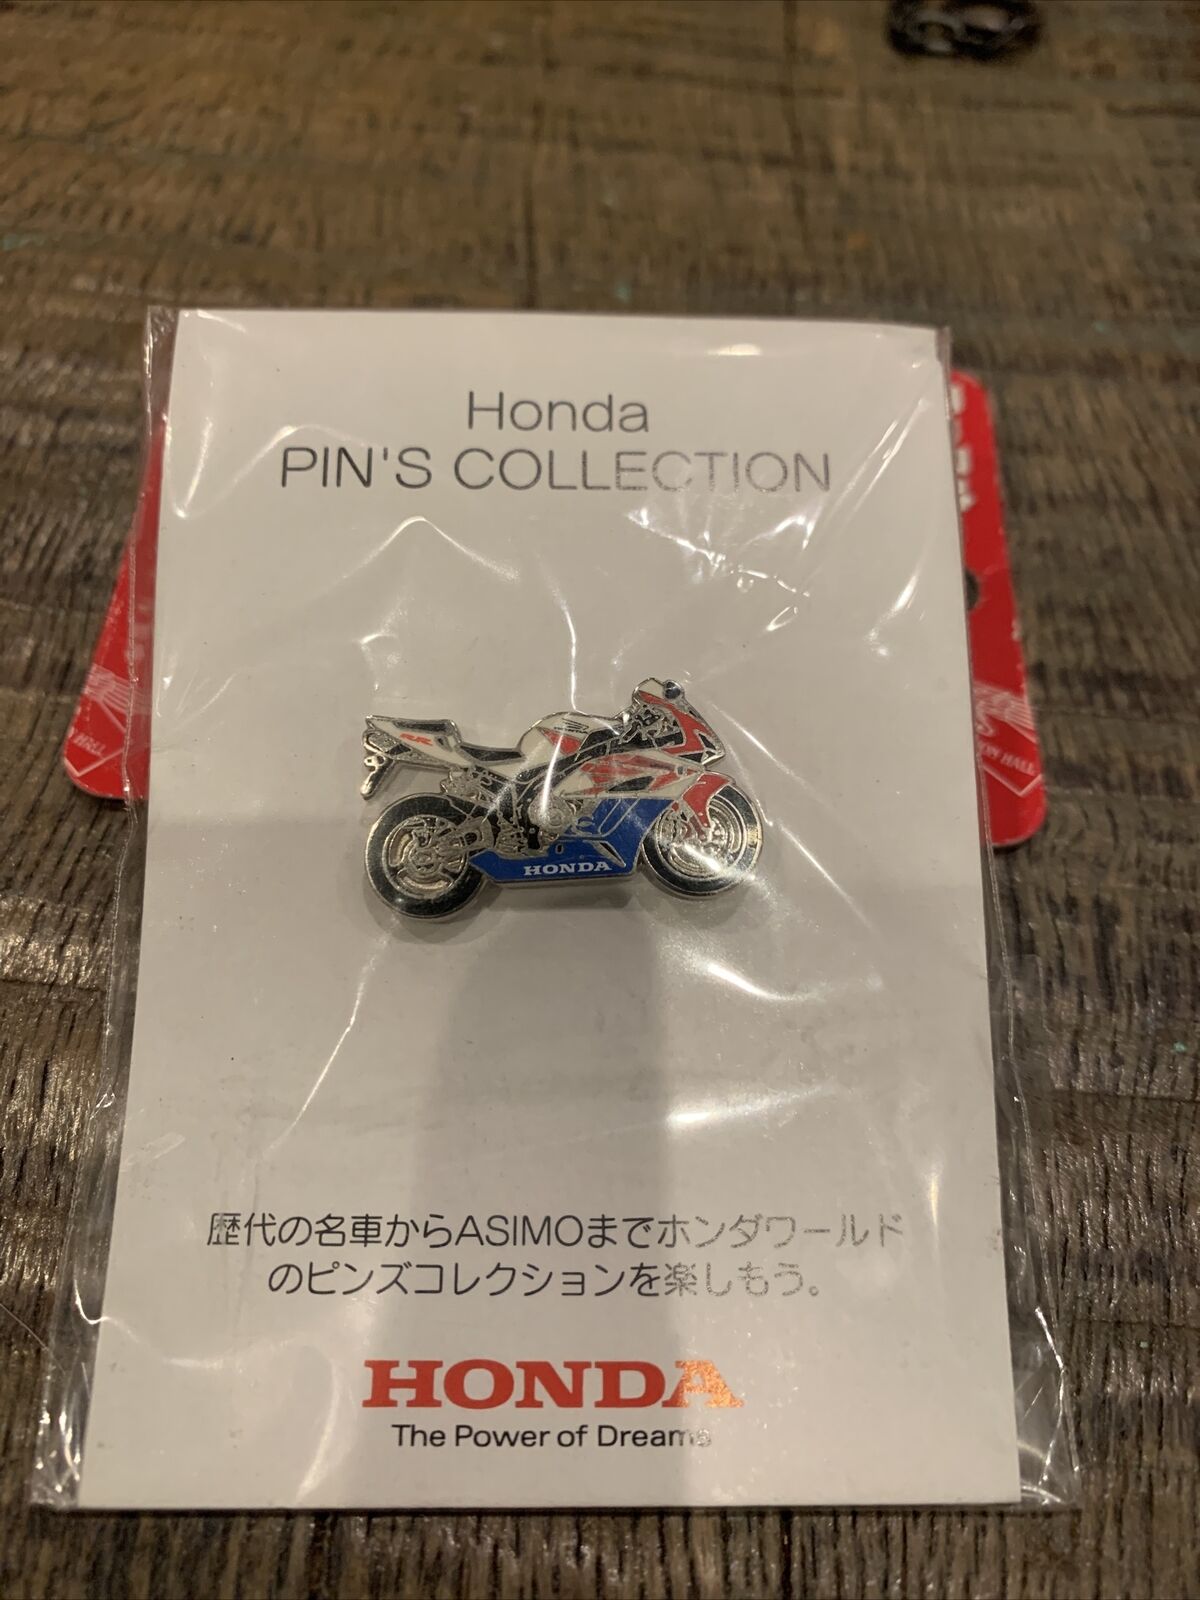 NEW Japanese Honda CBR Motocycle Pin JDM. From Honda Collection Hall 2005